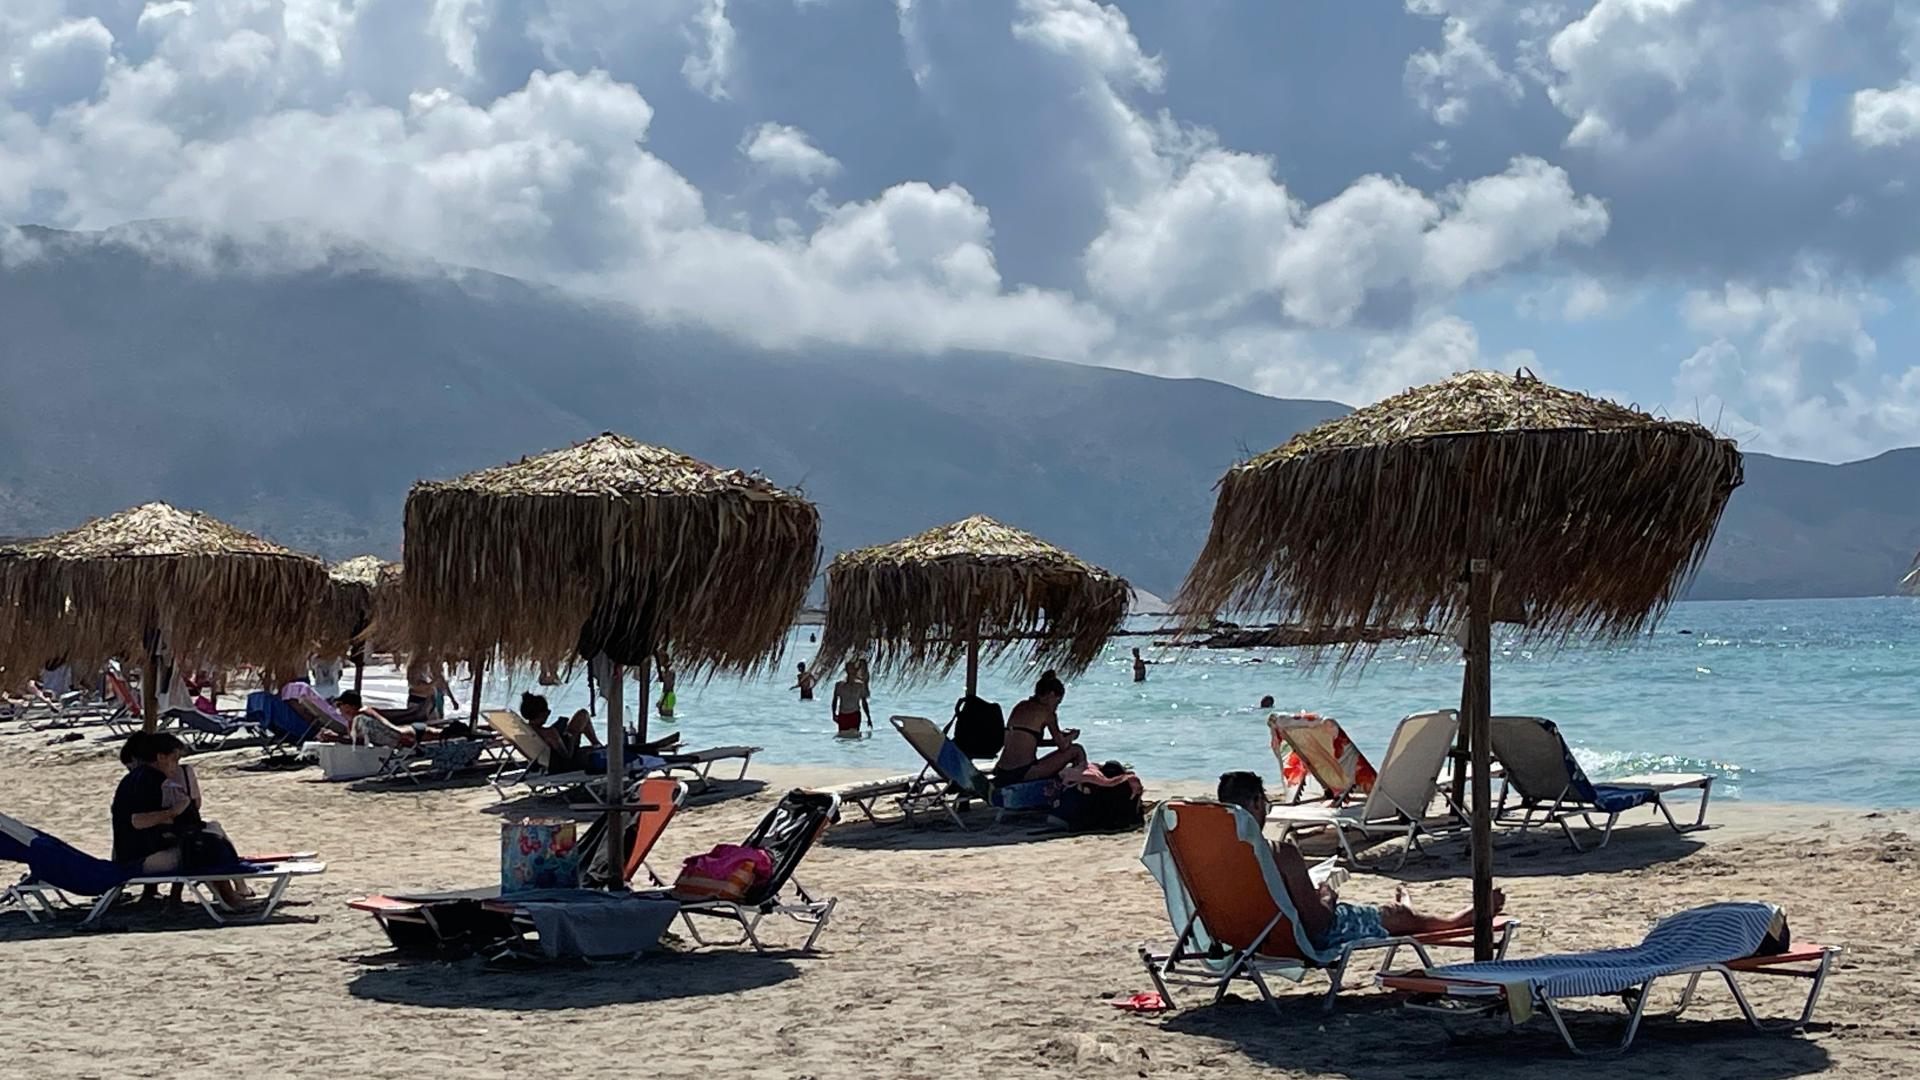 Elafonisi Beach Crete Greece 2021 pink sand beach